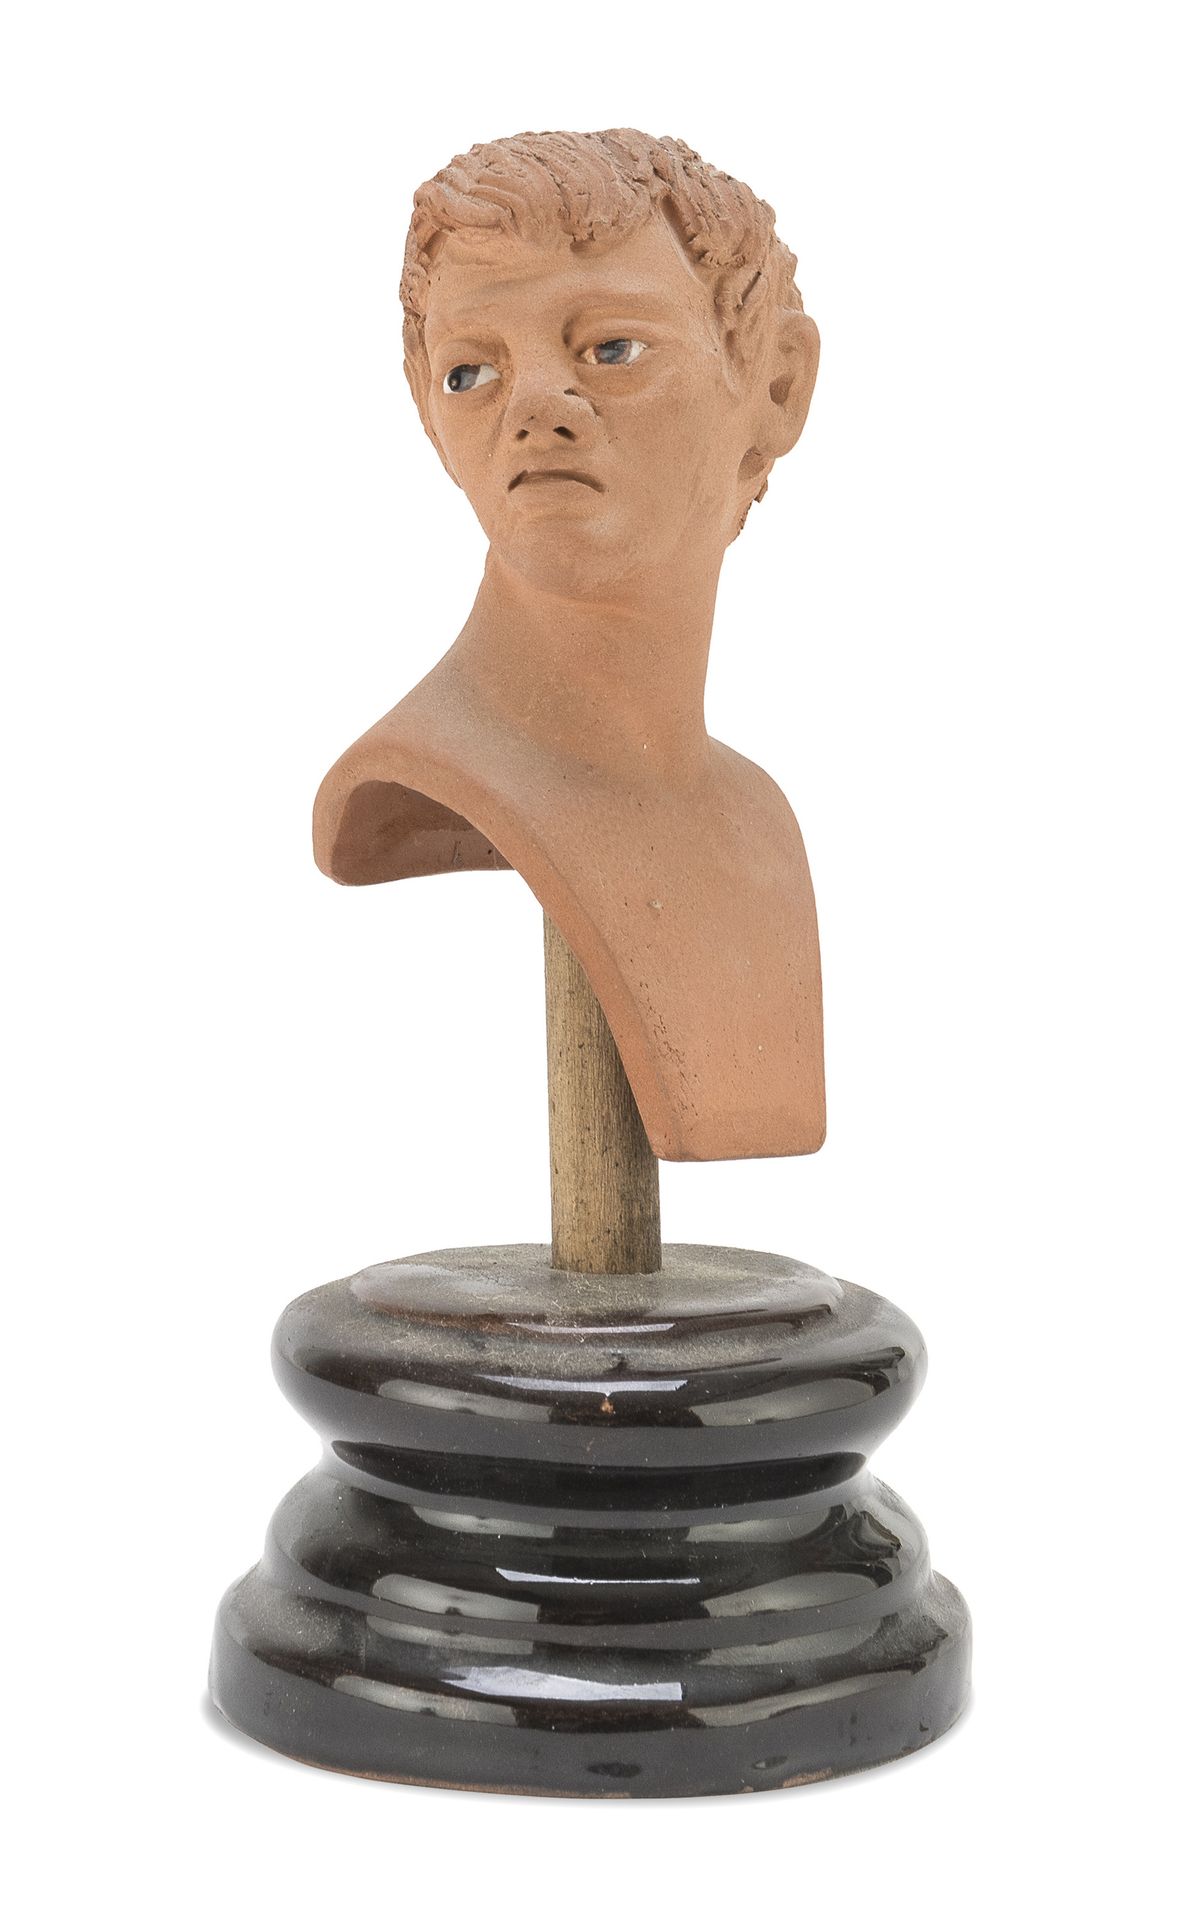 Null 那不勒斯陶艺家，20世纪



男性胸围

带玻璃眼睛的小陶器雕塑，9x 5 x 4厘米

背面有签名 "Pia Fildi"。

陶瓷底座